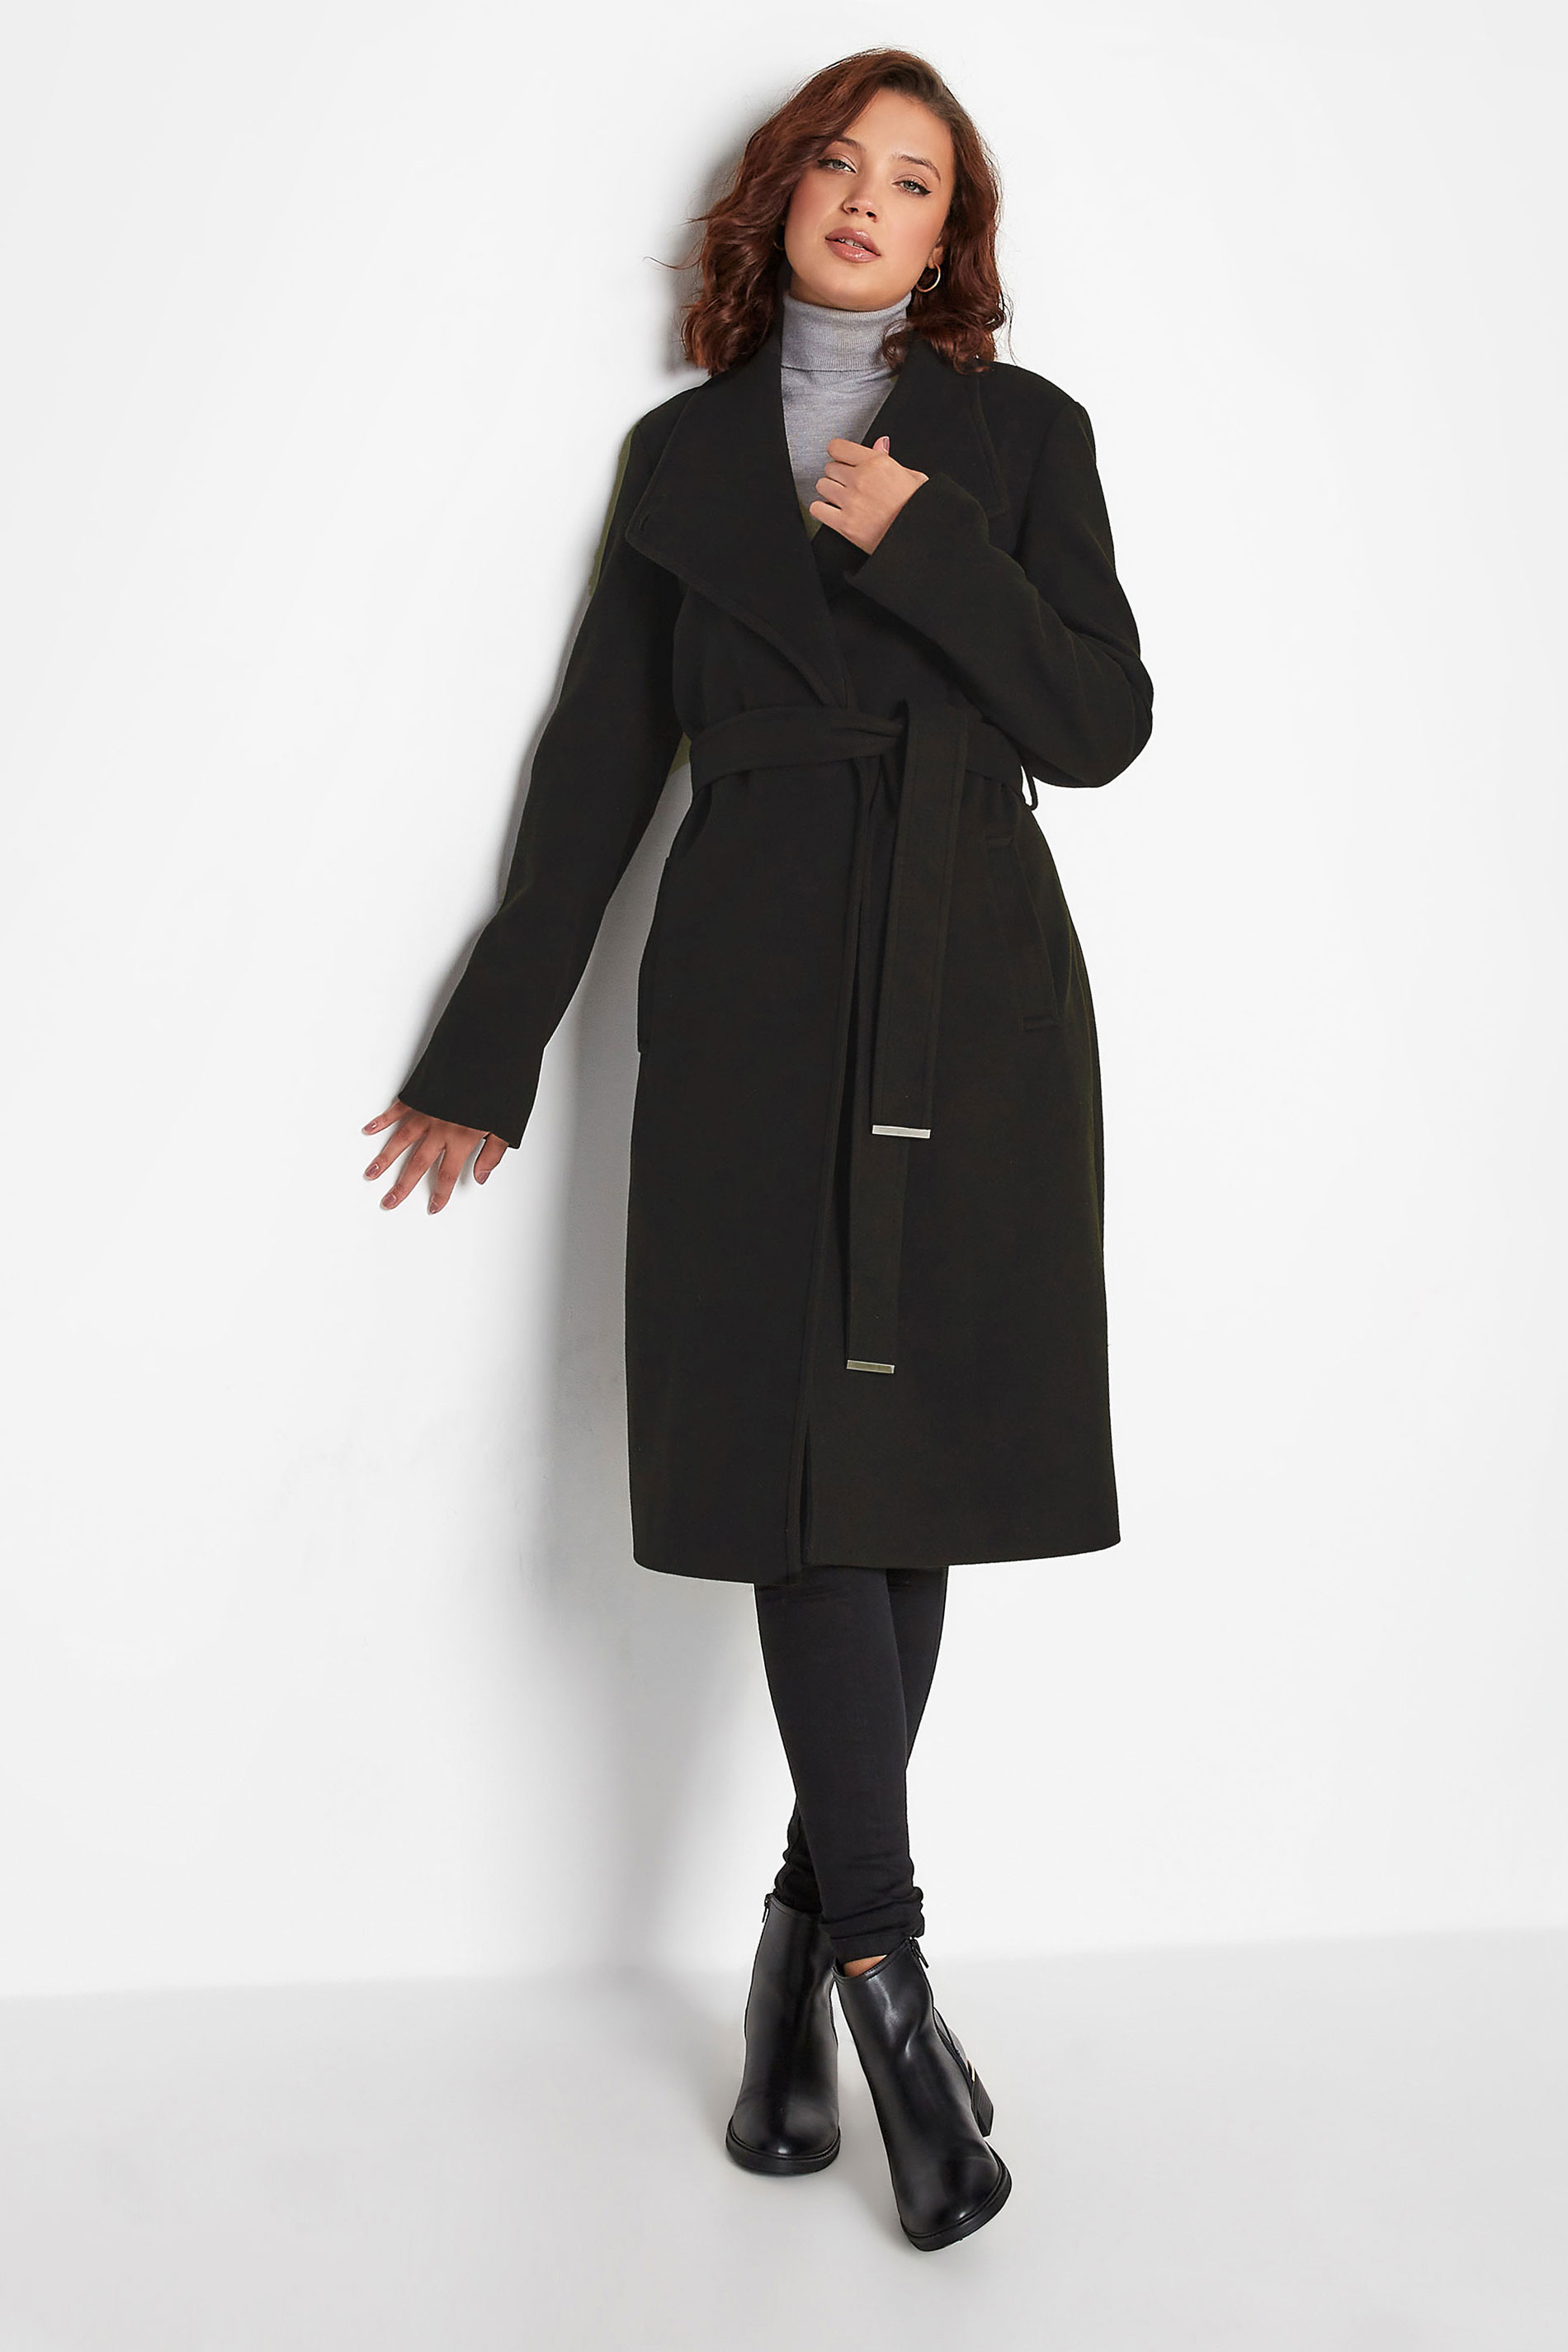 LTS Tall Women's Black Belted Coat | Long Tall Sally 1